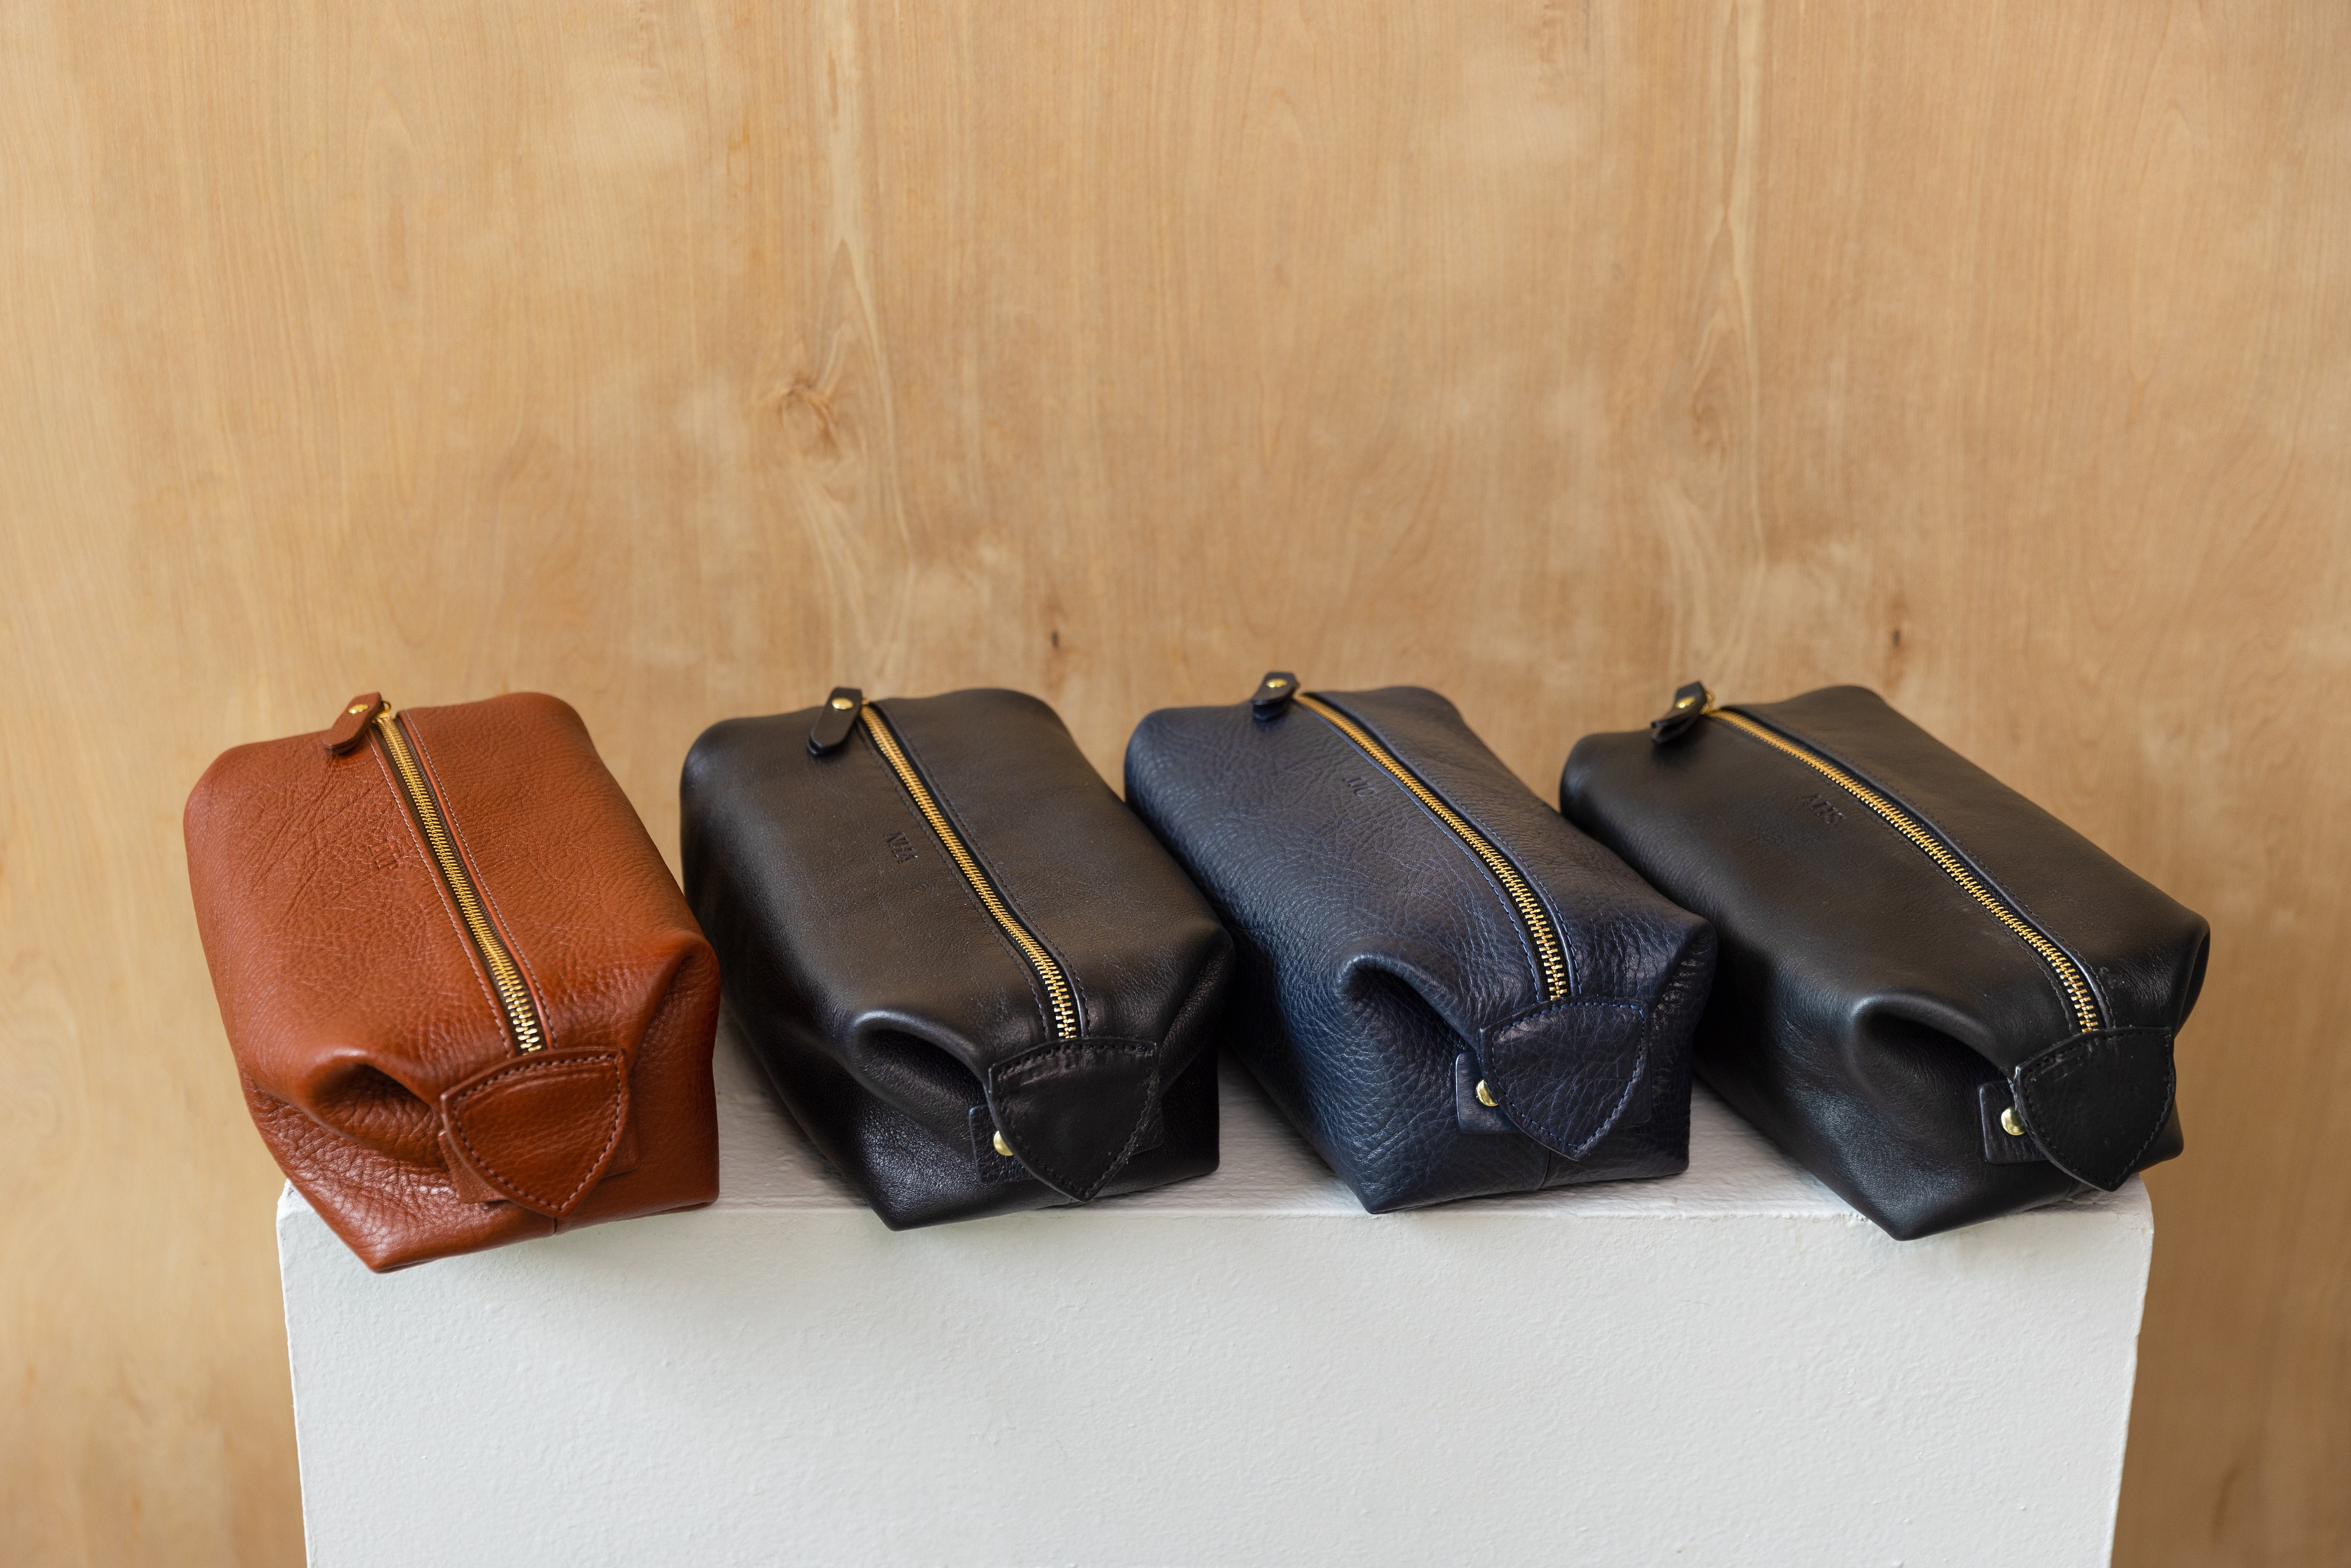  Leather Dopp Kit, Men's Chocolate Leather Travel Kit